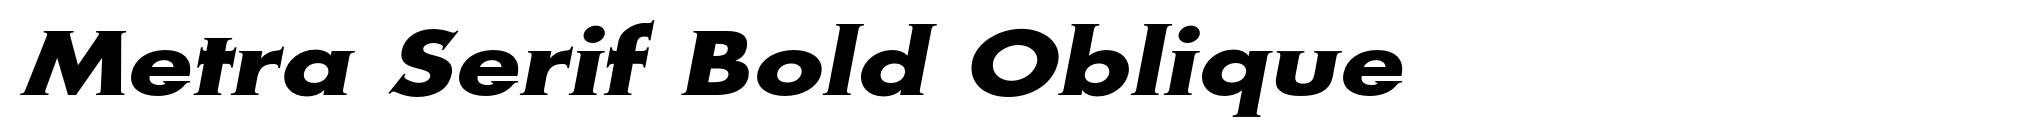 Metra Serif Bold Oblique image